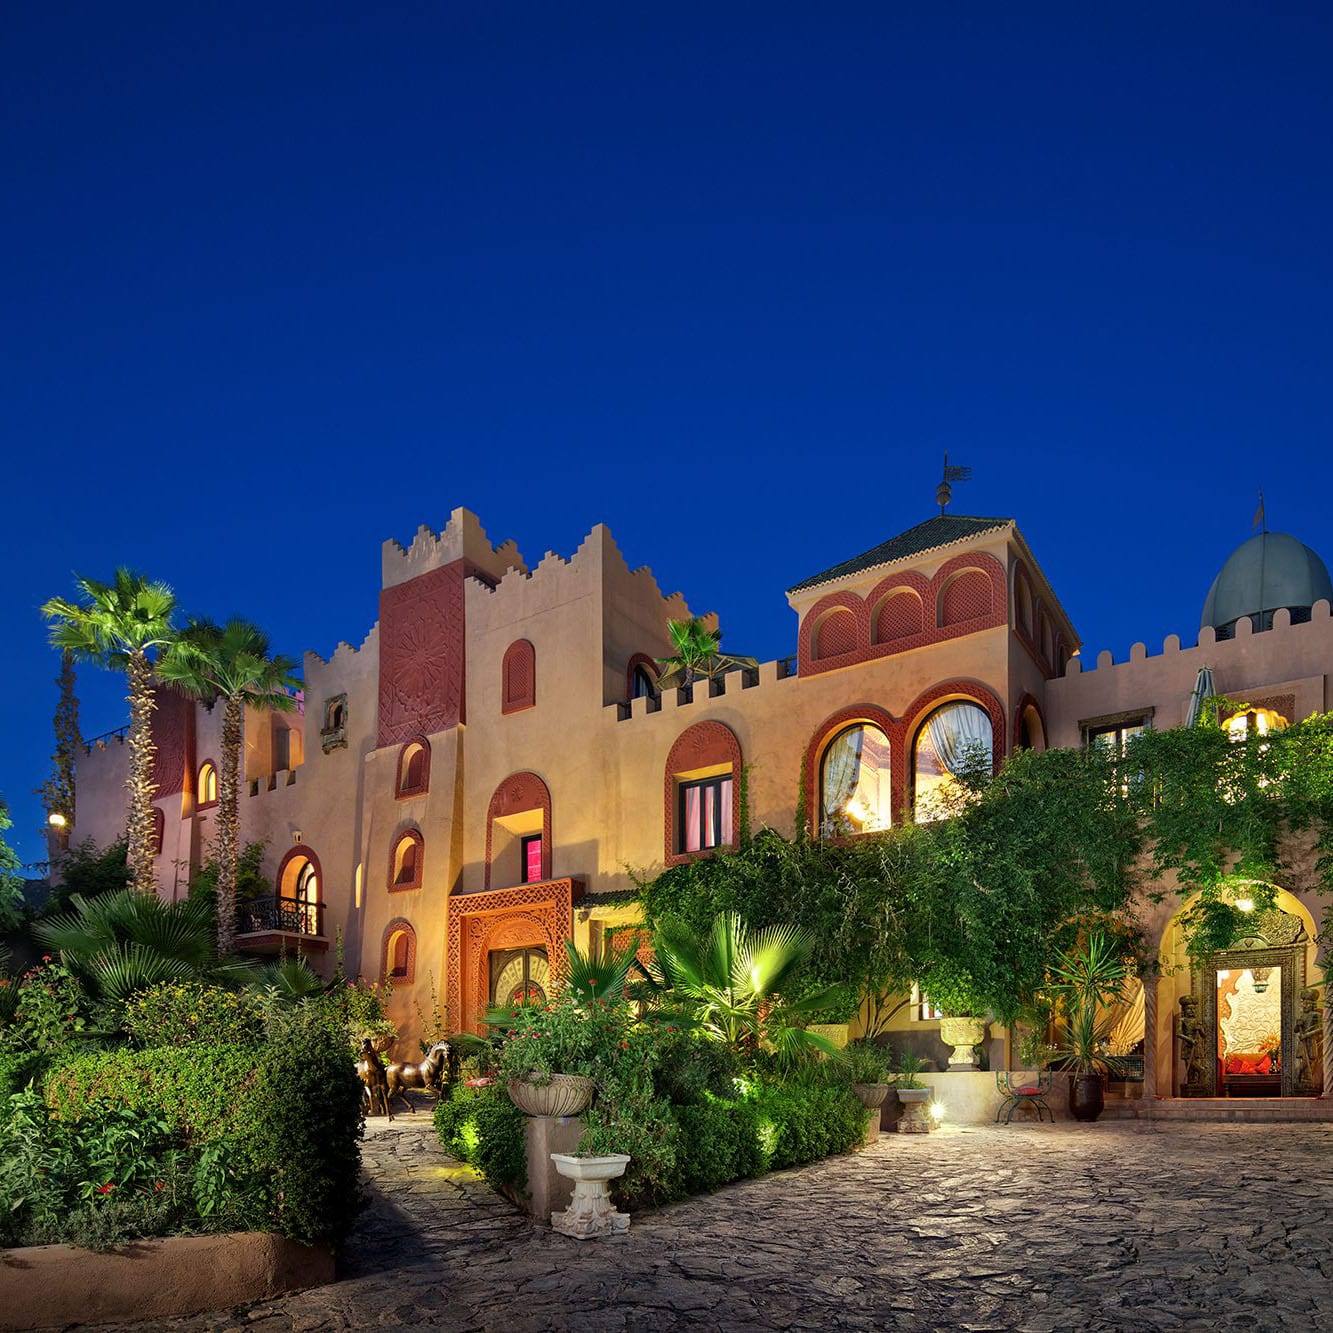 Our favourite destination: Morocco, to(re)discover!